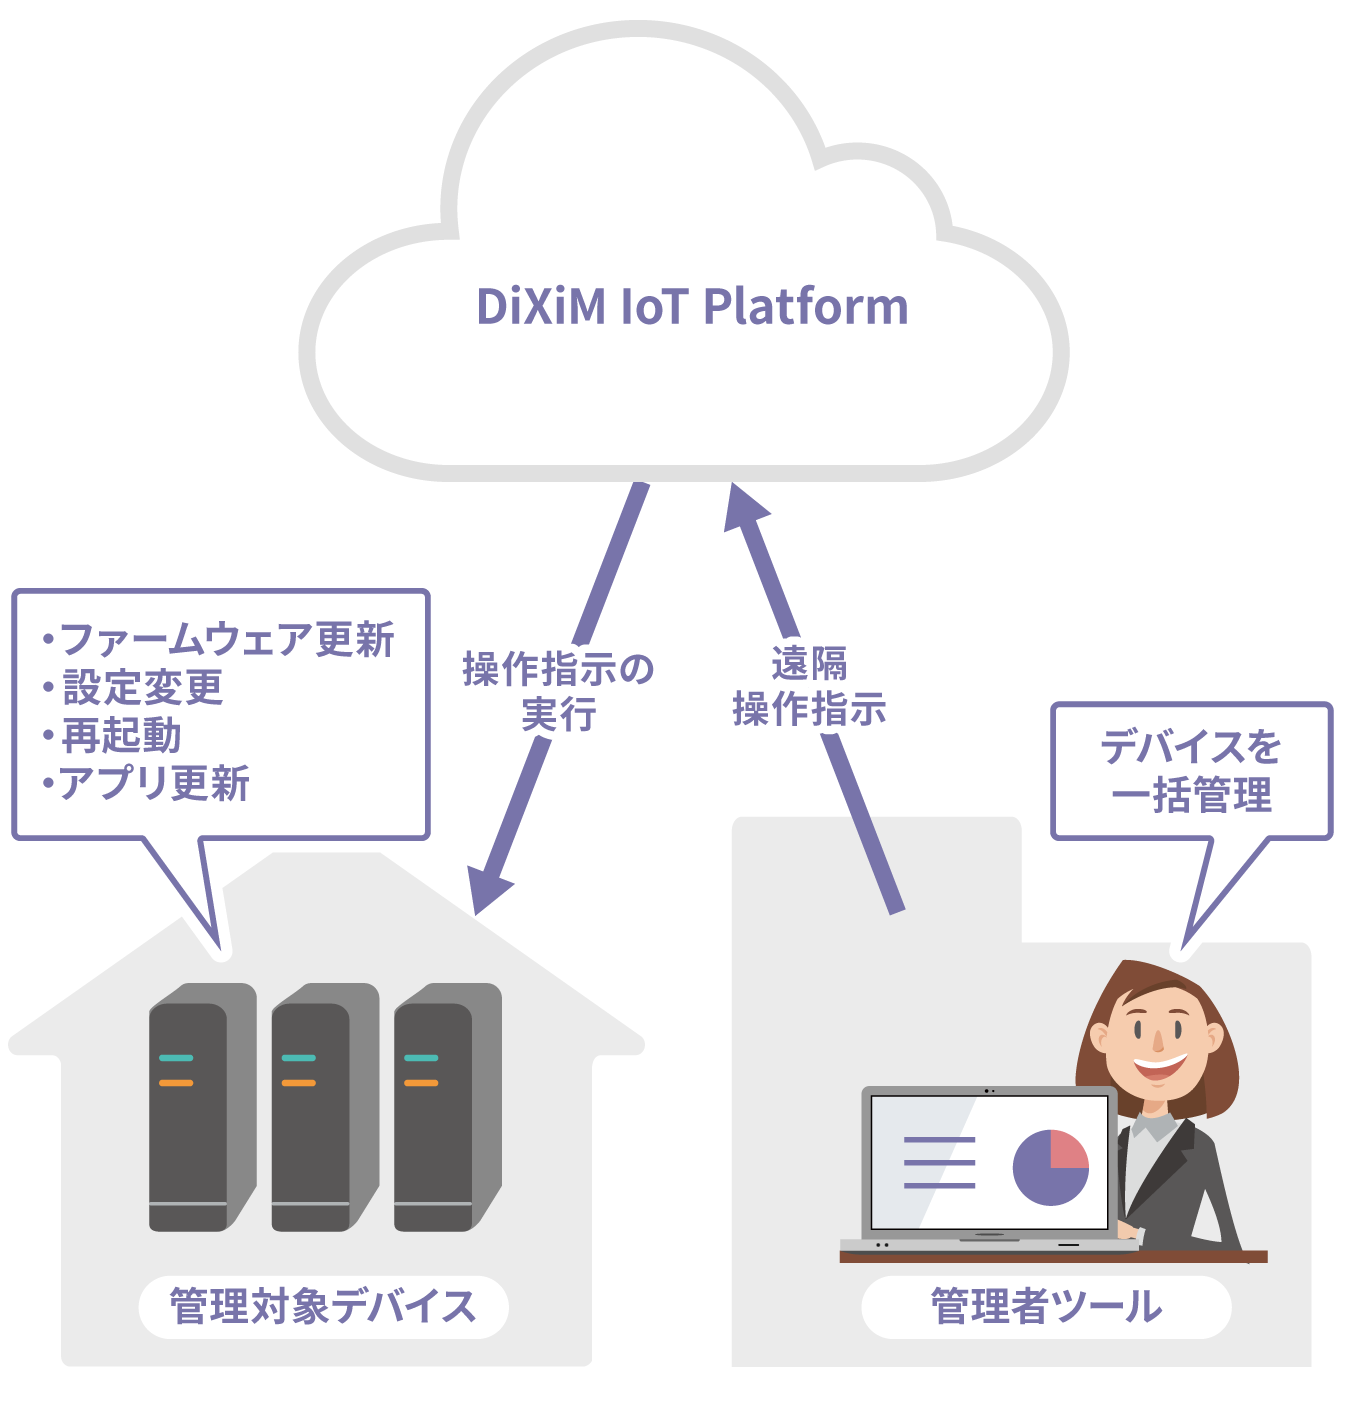 DiXiM IoT Platform デバイスの遠隔操作・一括管理機能